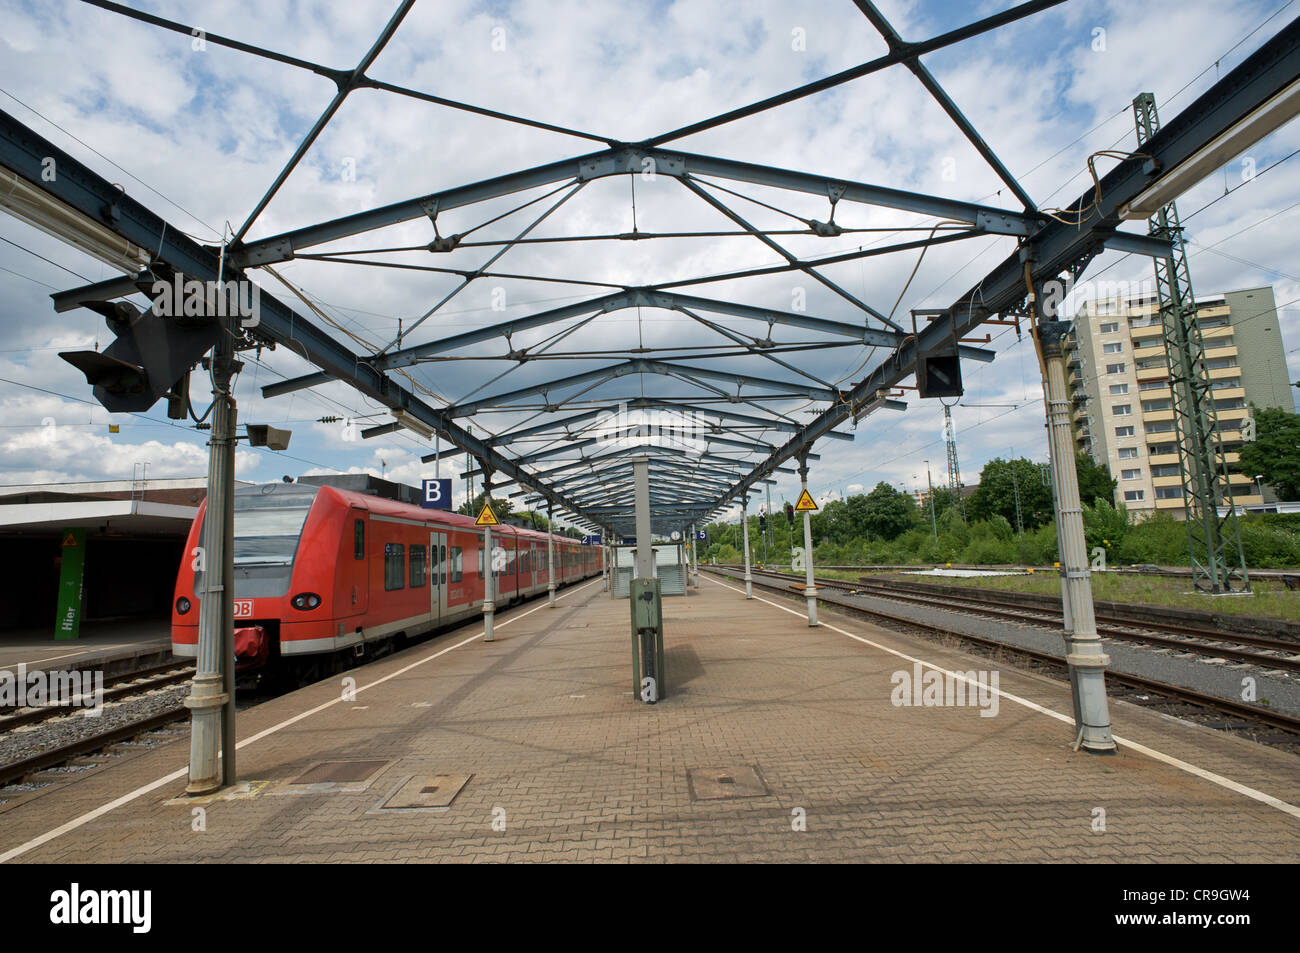 Historic railway platform canopy Opladen Germany Stock Photo